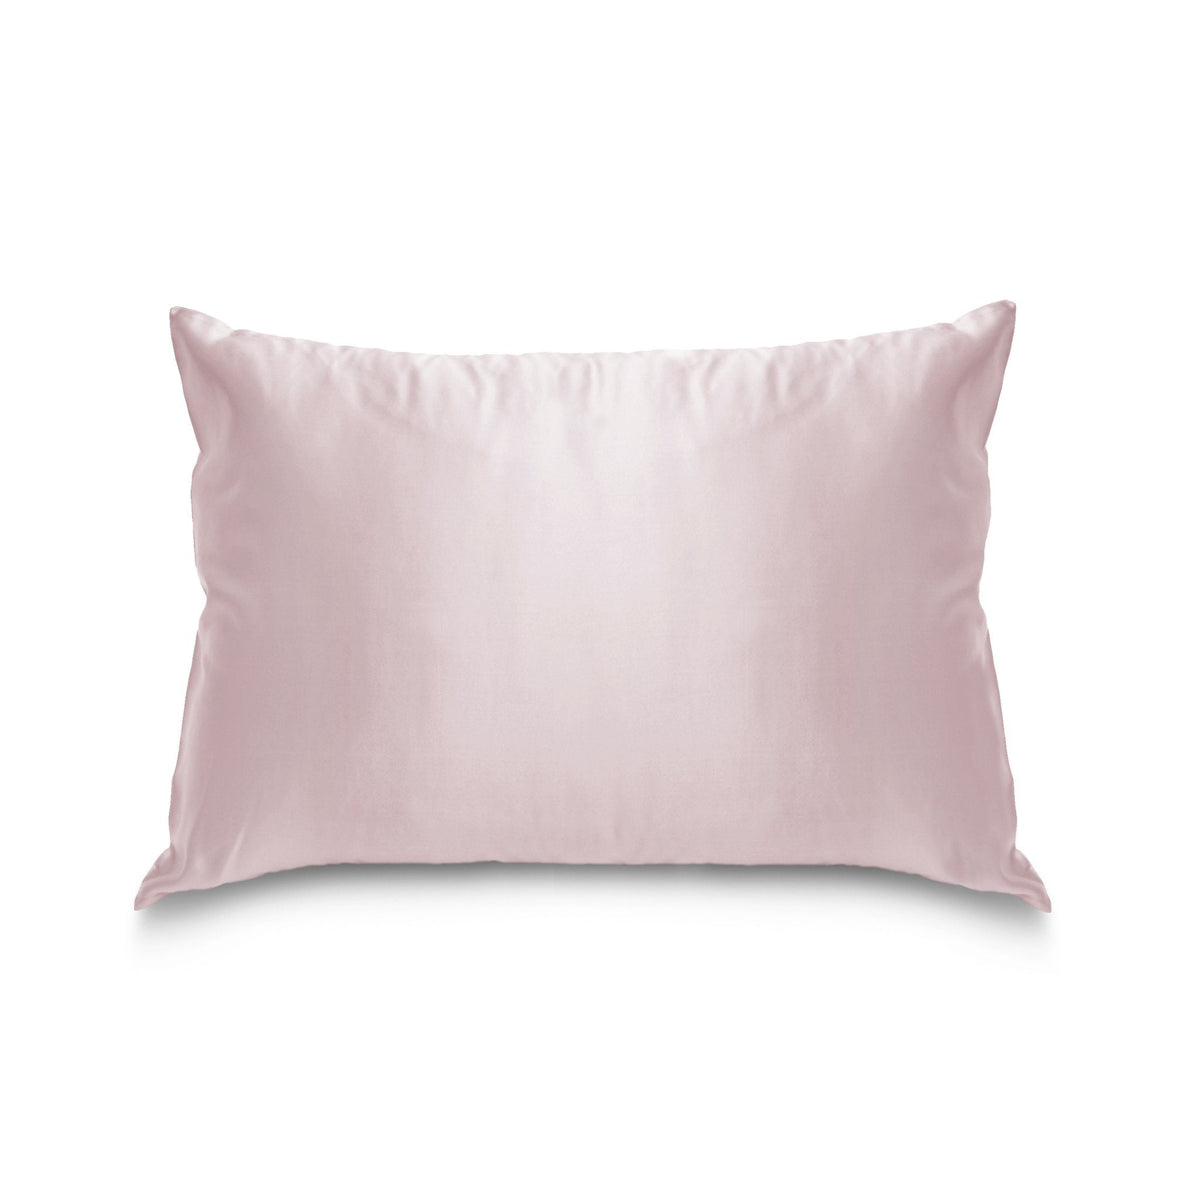 Silk Pillowcase for Travel - Pink